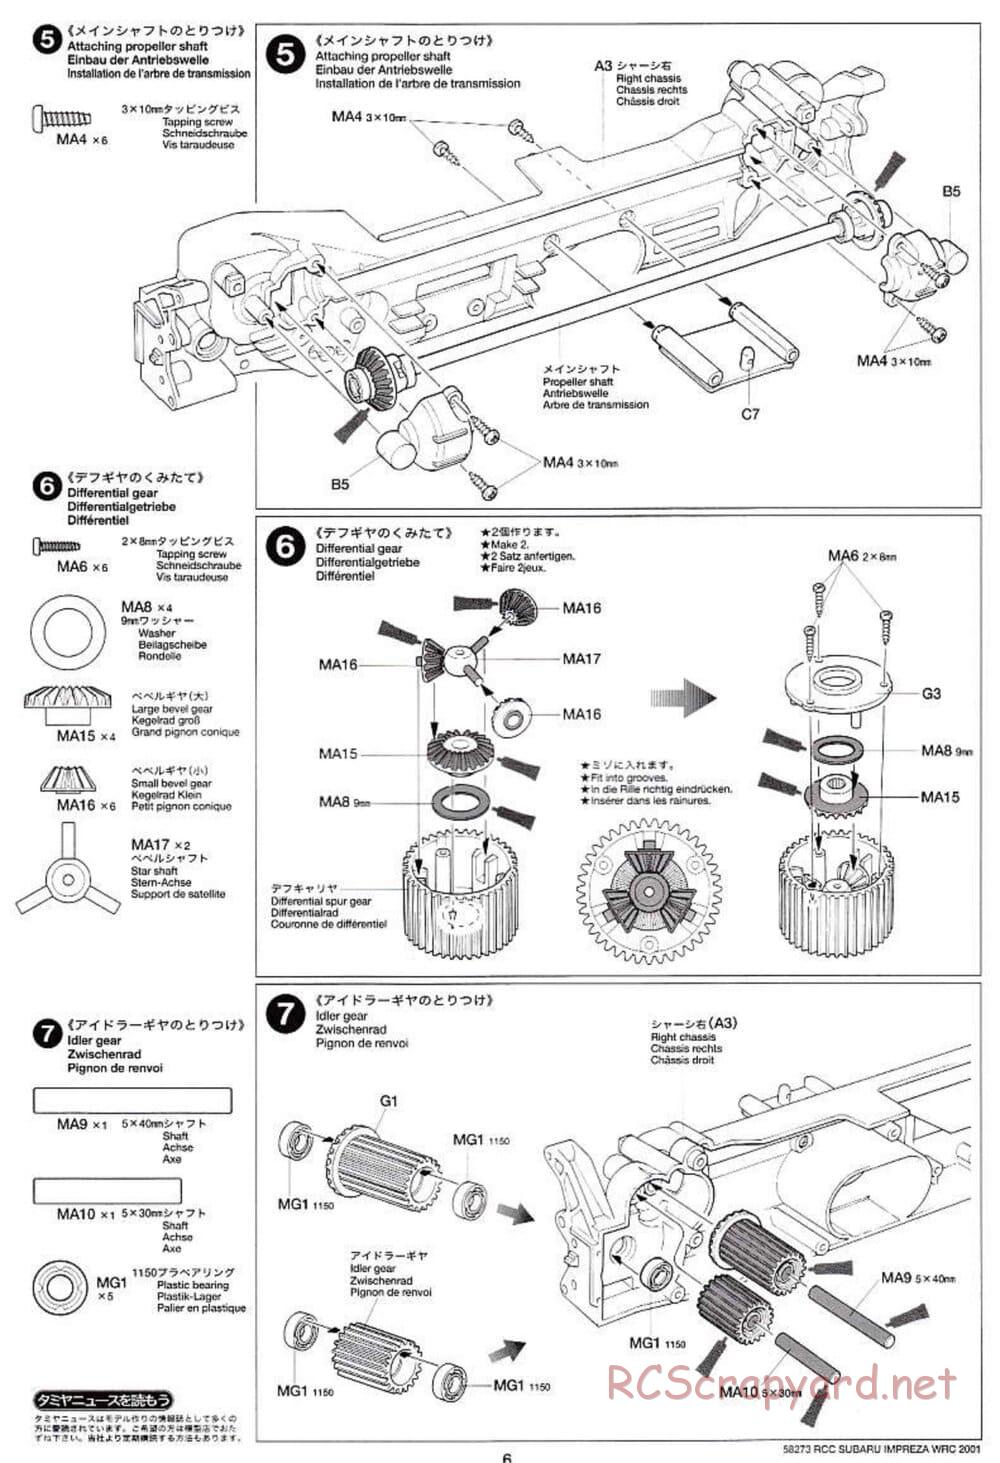 Tamiya - Subaru Impreza WRC 2001 - TL-01 Chassis - Manual - Page 6